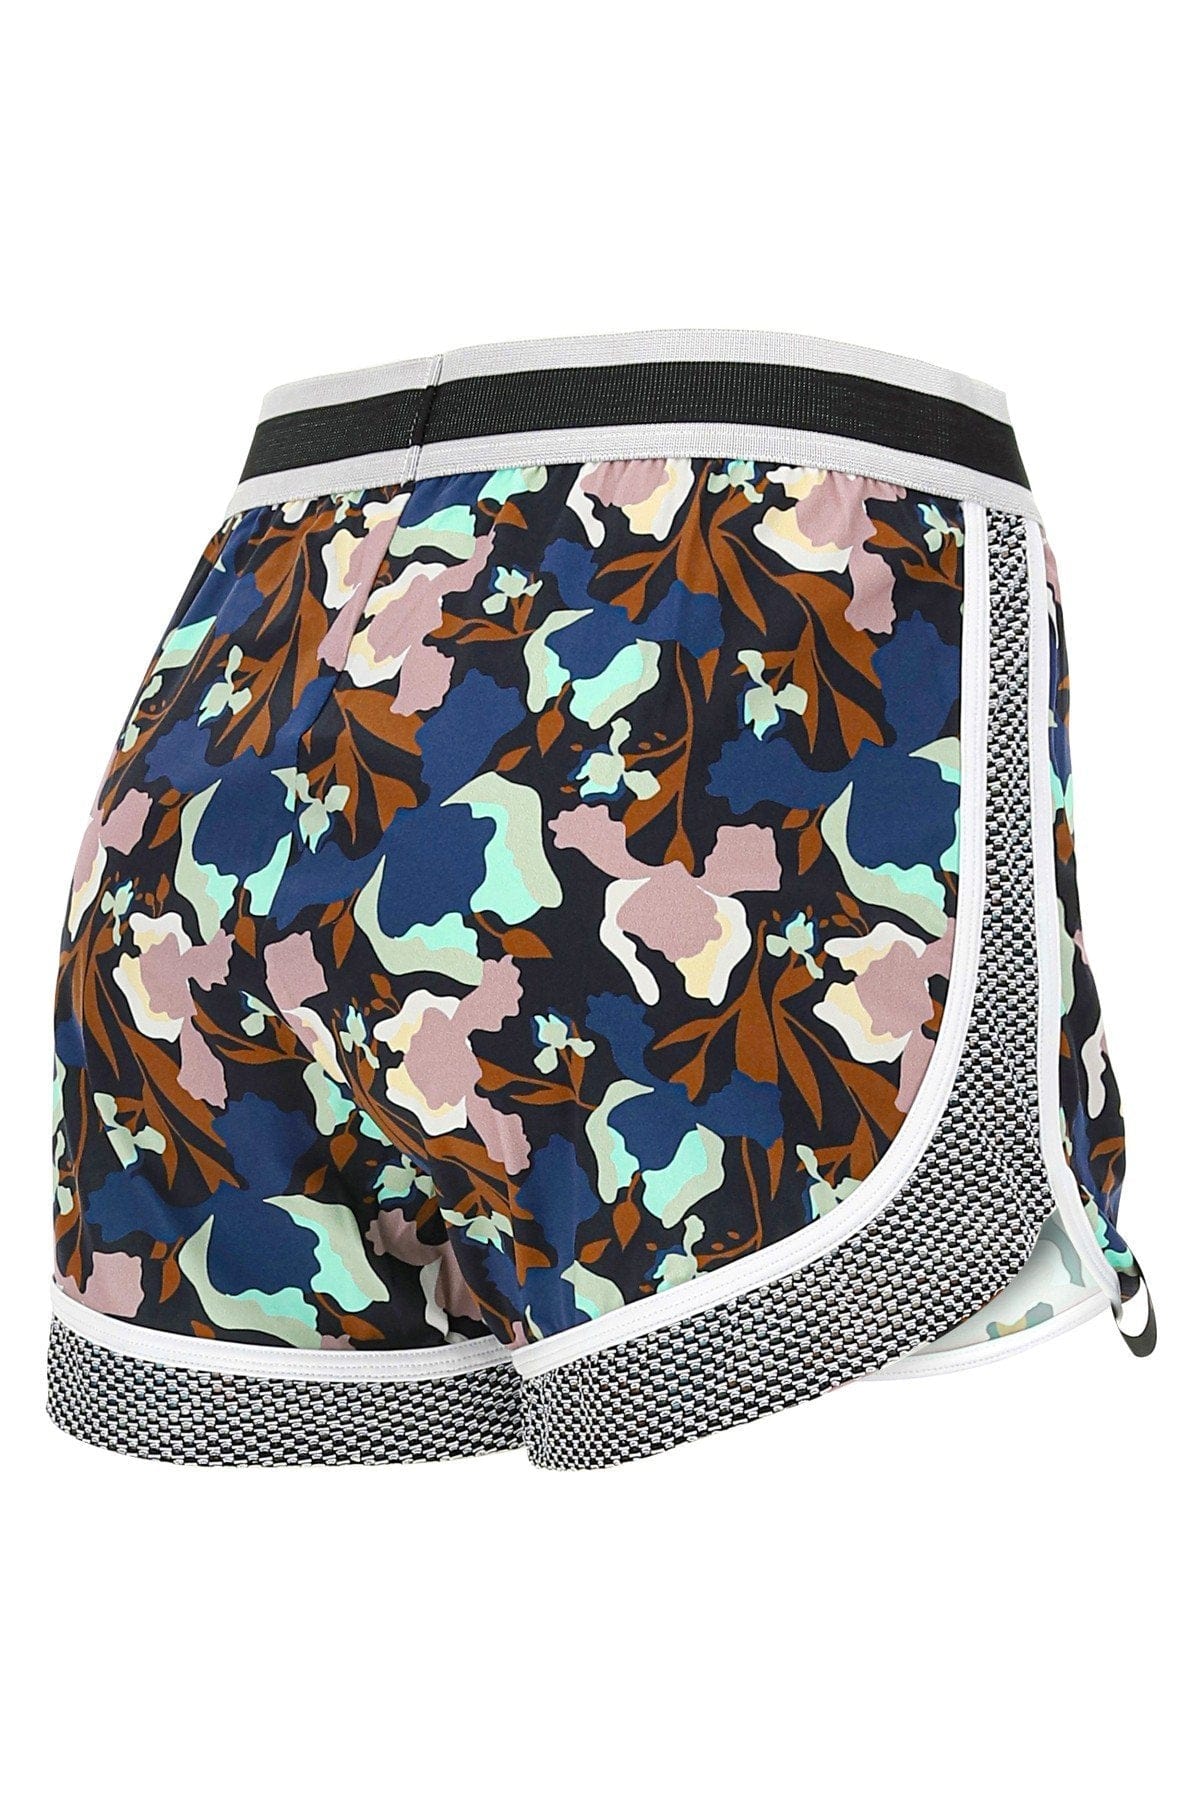 MII Sport Shorts Mid Rise - Estampado floral 2